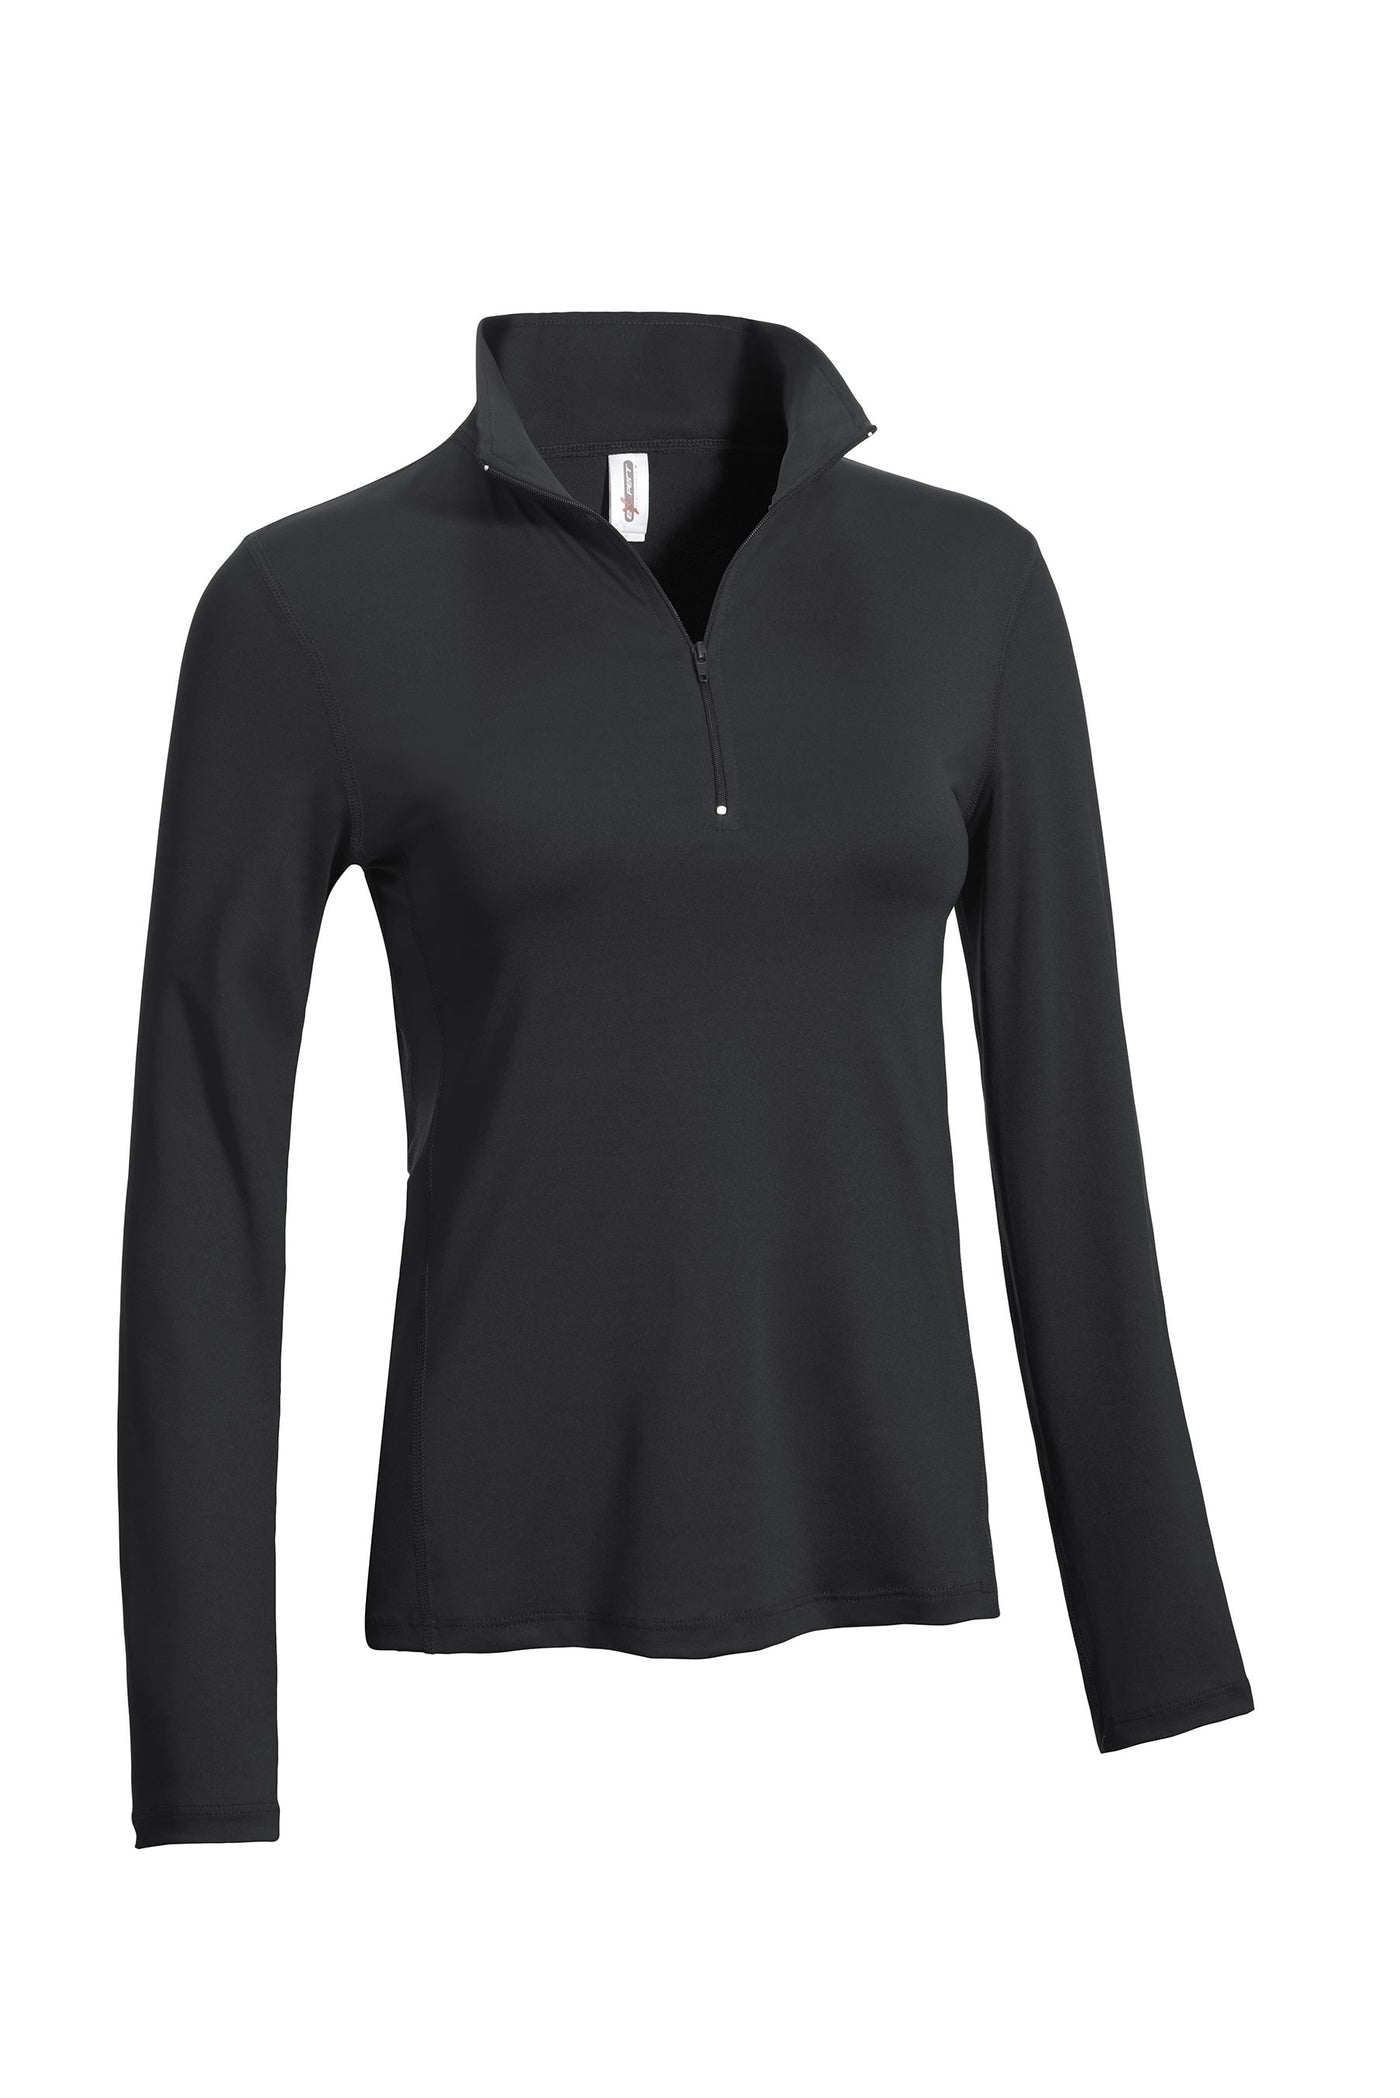 Quarter Zip Track Suit Pullover Top 🇺🇸 - Expert Brand Apparel#color_black